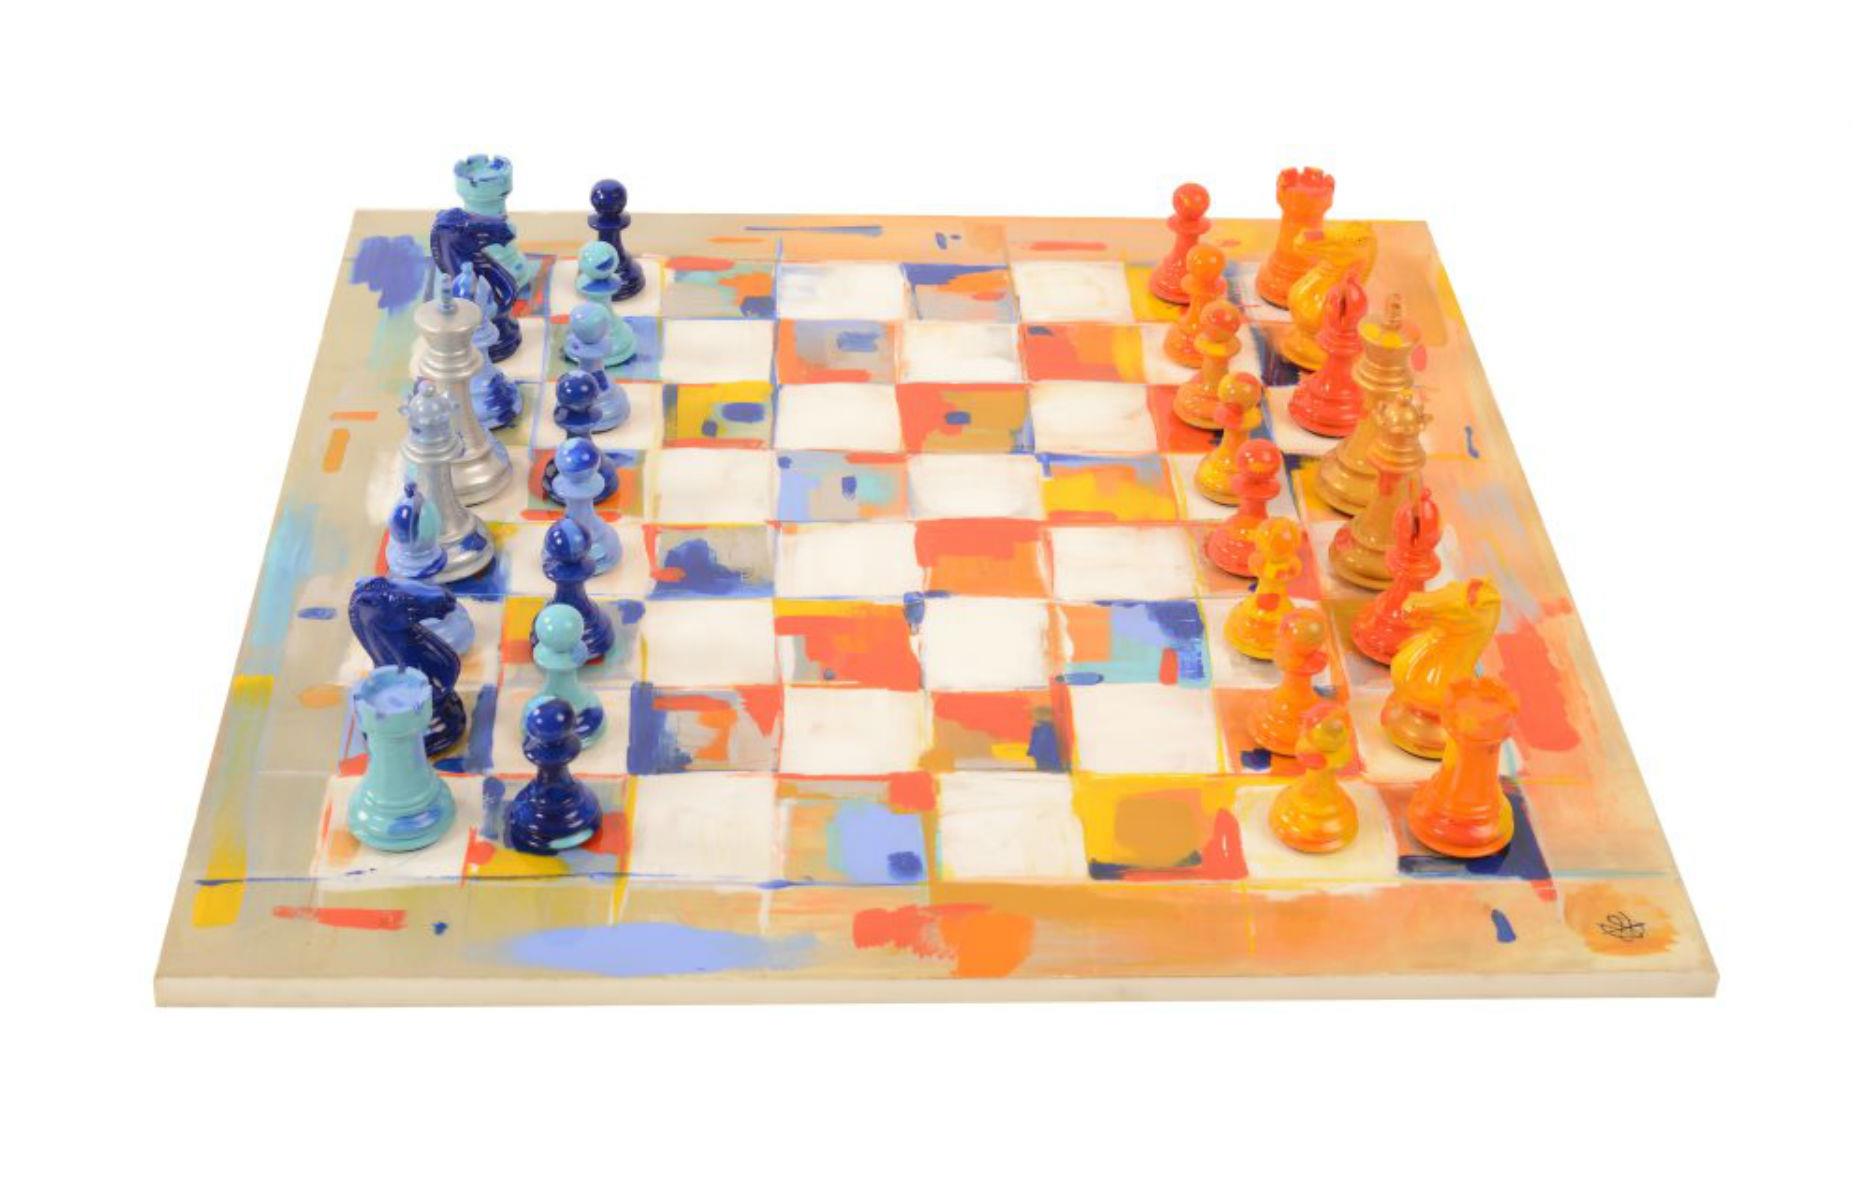 Crystal Fischetti X Purling London Art chess set: $8,000 (£6k)